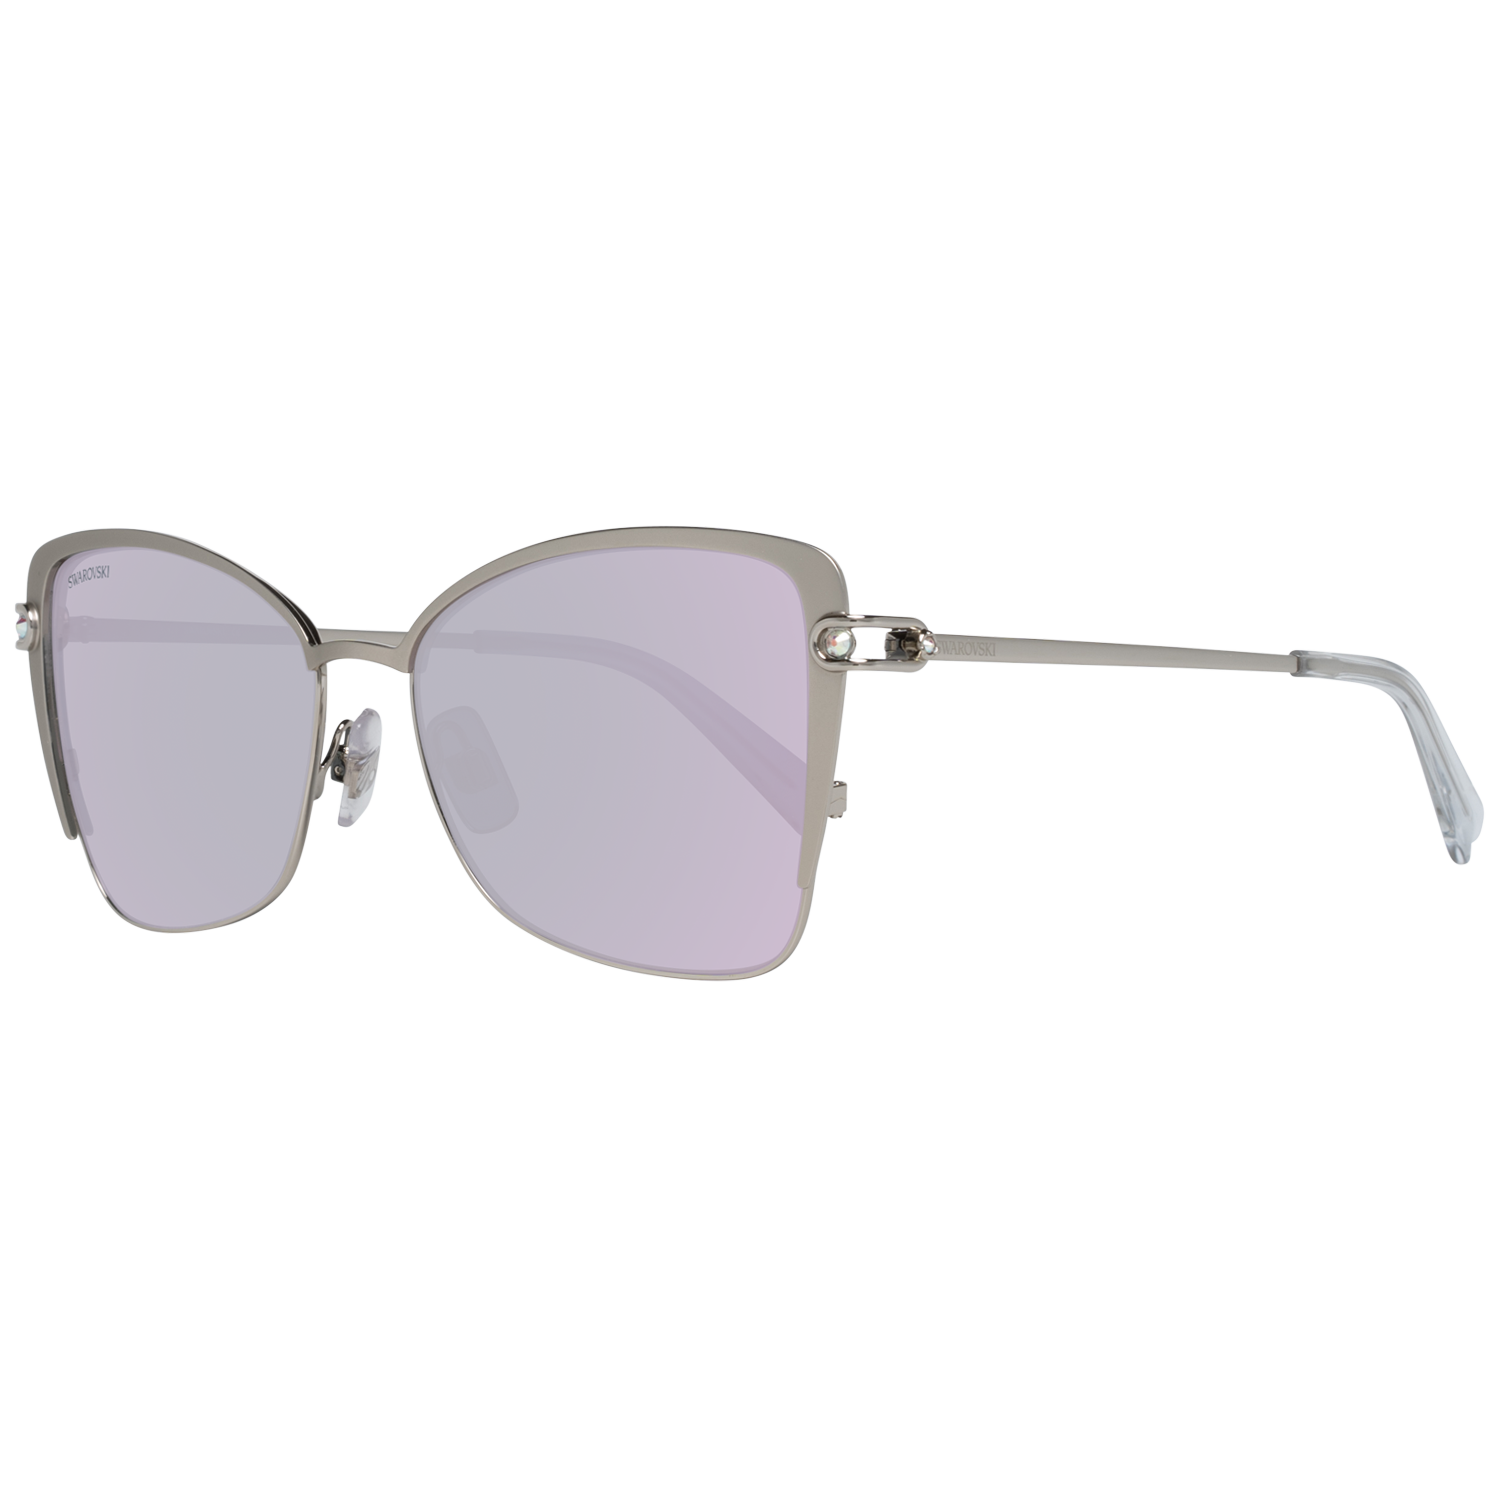 Swarovski Sunglasses Swarovski Sunglasses SK0314 17Z 56 Eyeglasses Eyewear UK USA Australia 